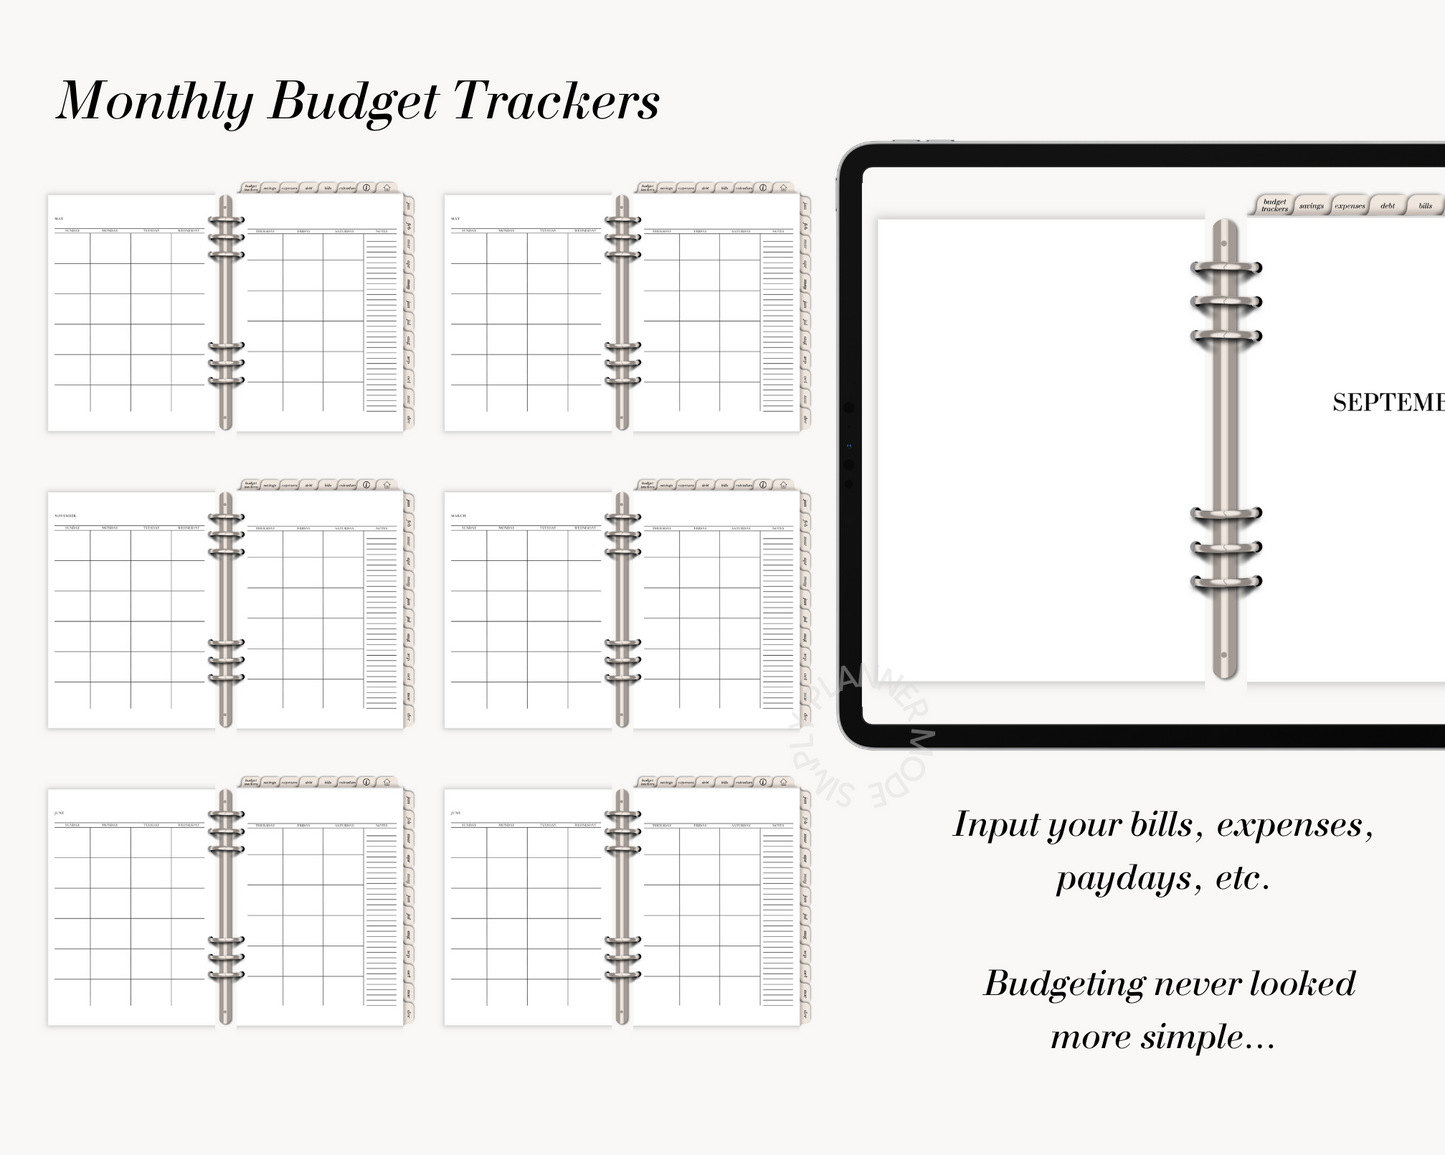 Budget Digital Planner